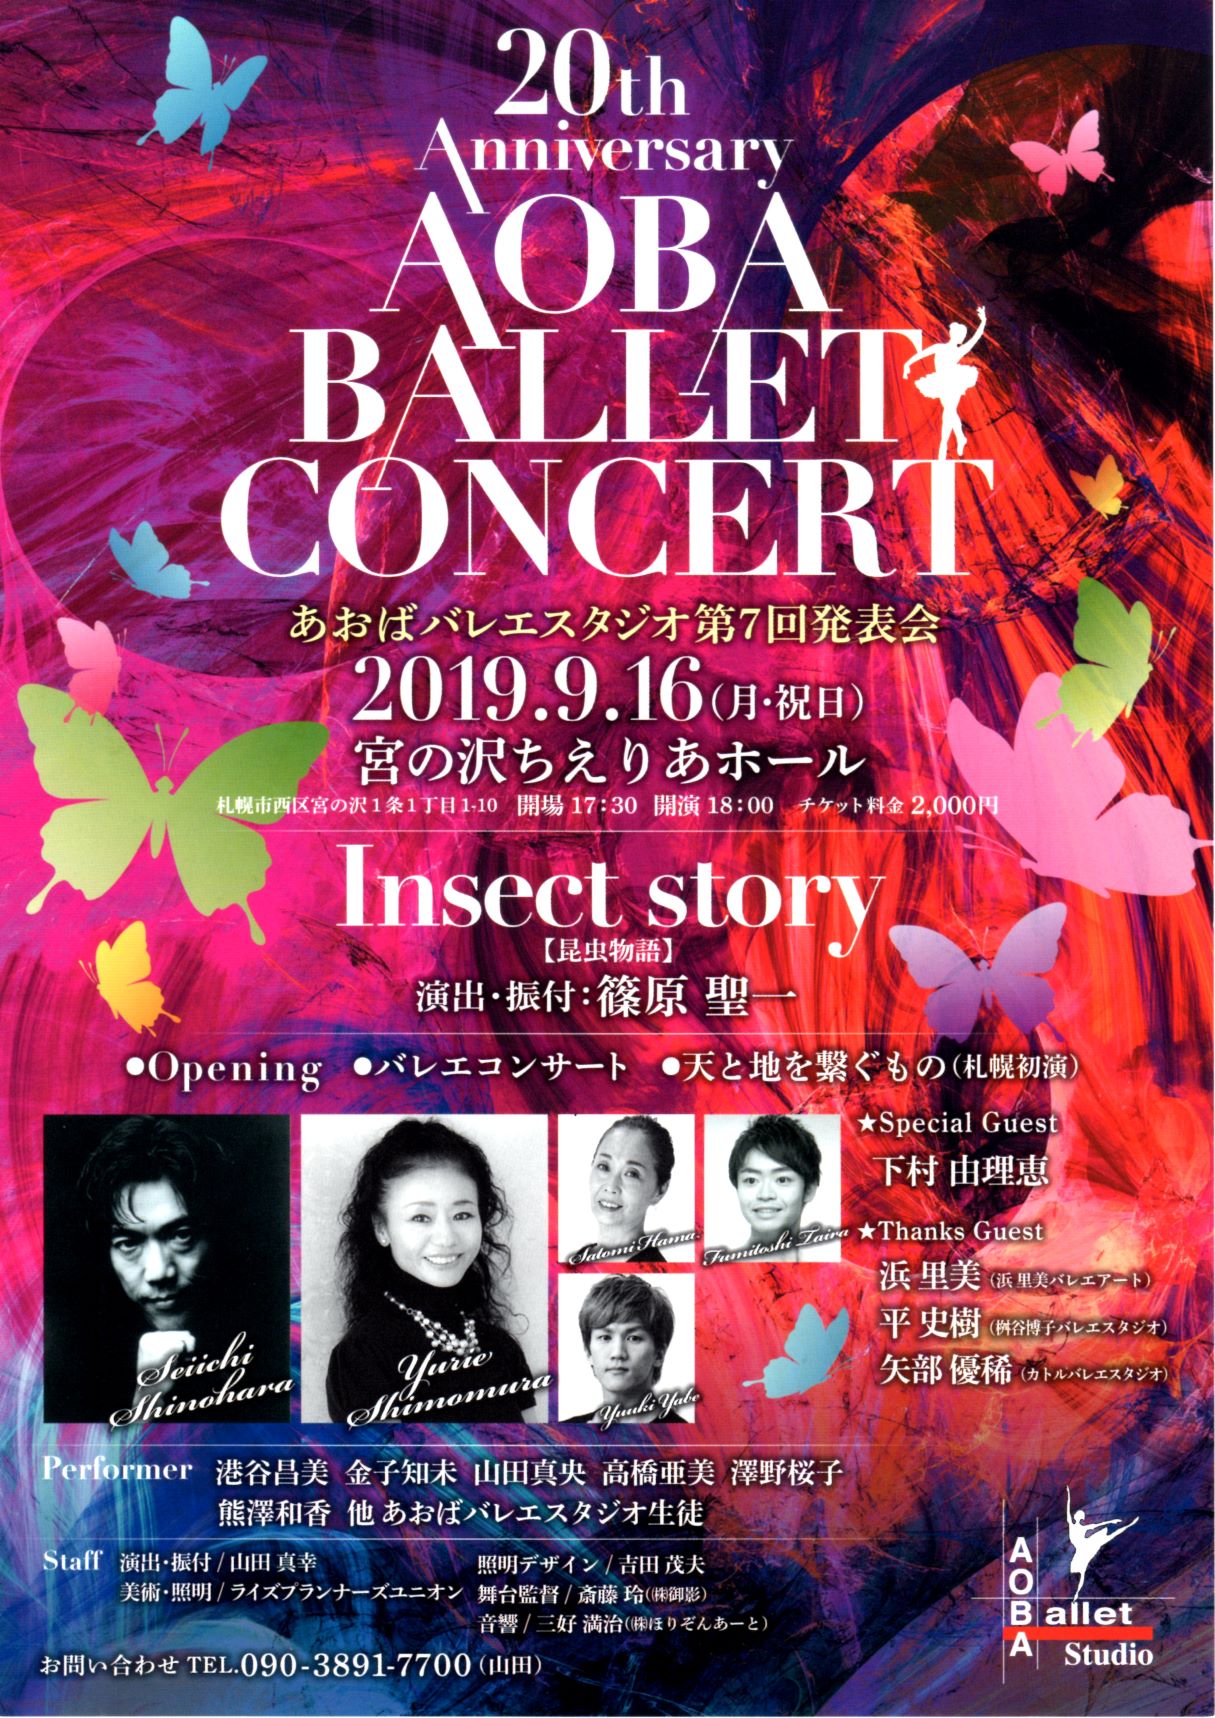 AOBA BALLET CONCERT 20th Anniversary 第7回発表会